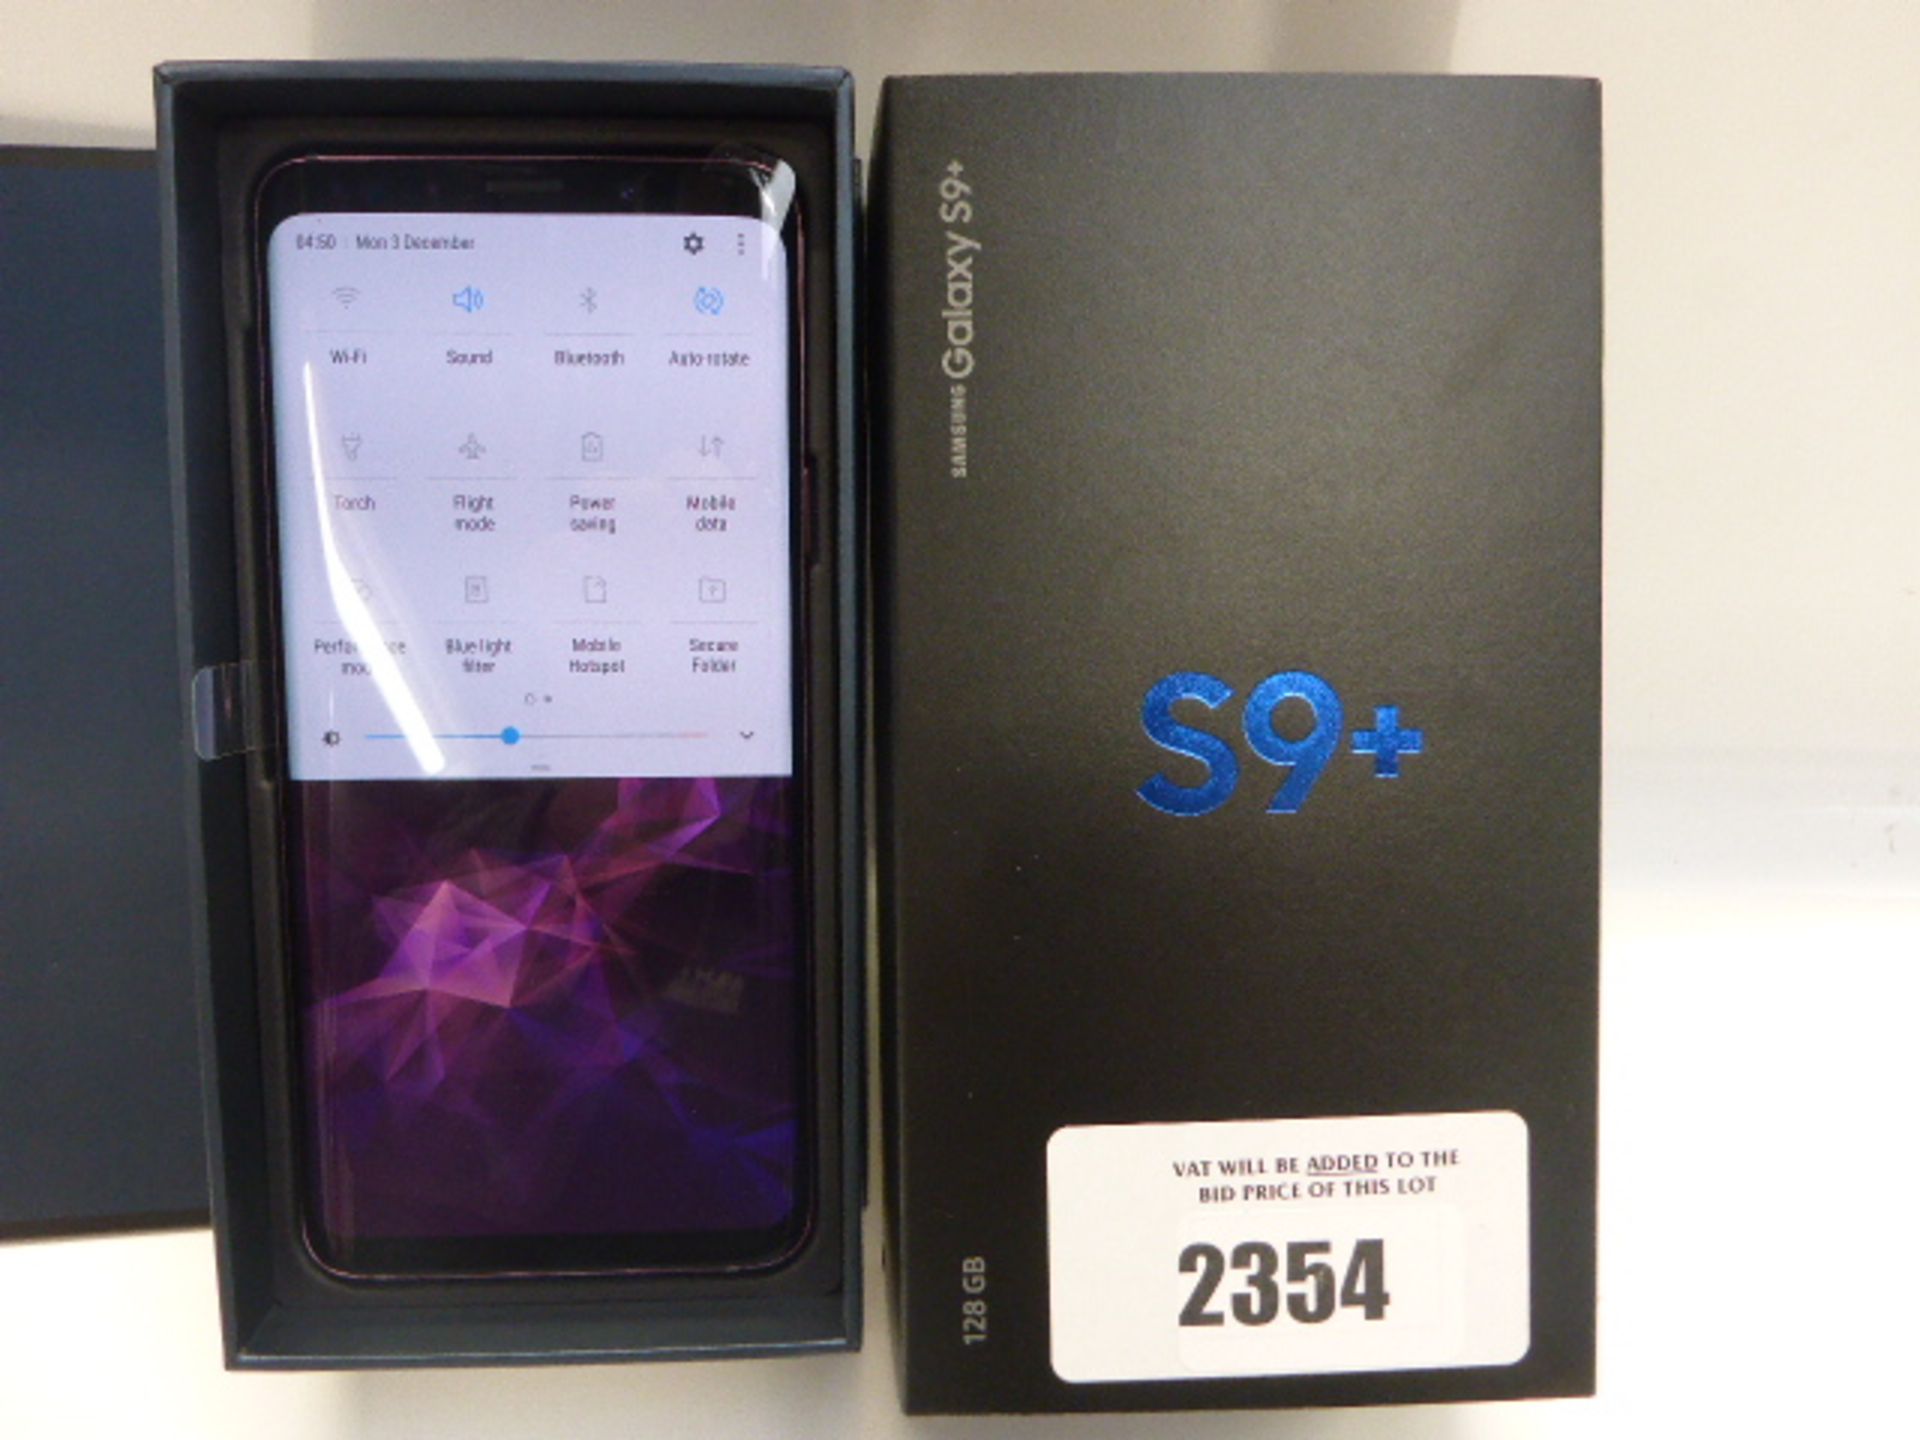 Samsung S9+ 128GB mobile in lilac purple, boxed.